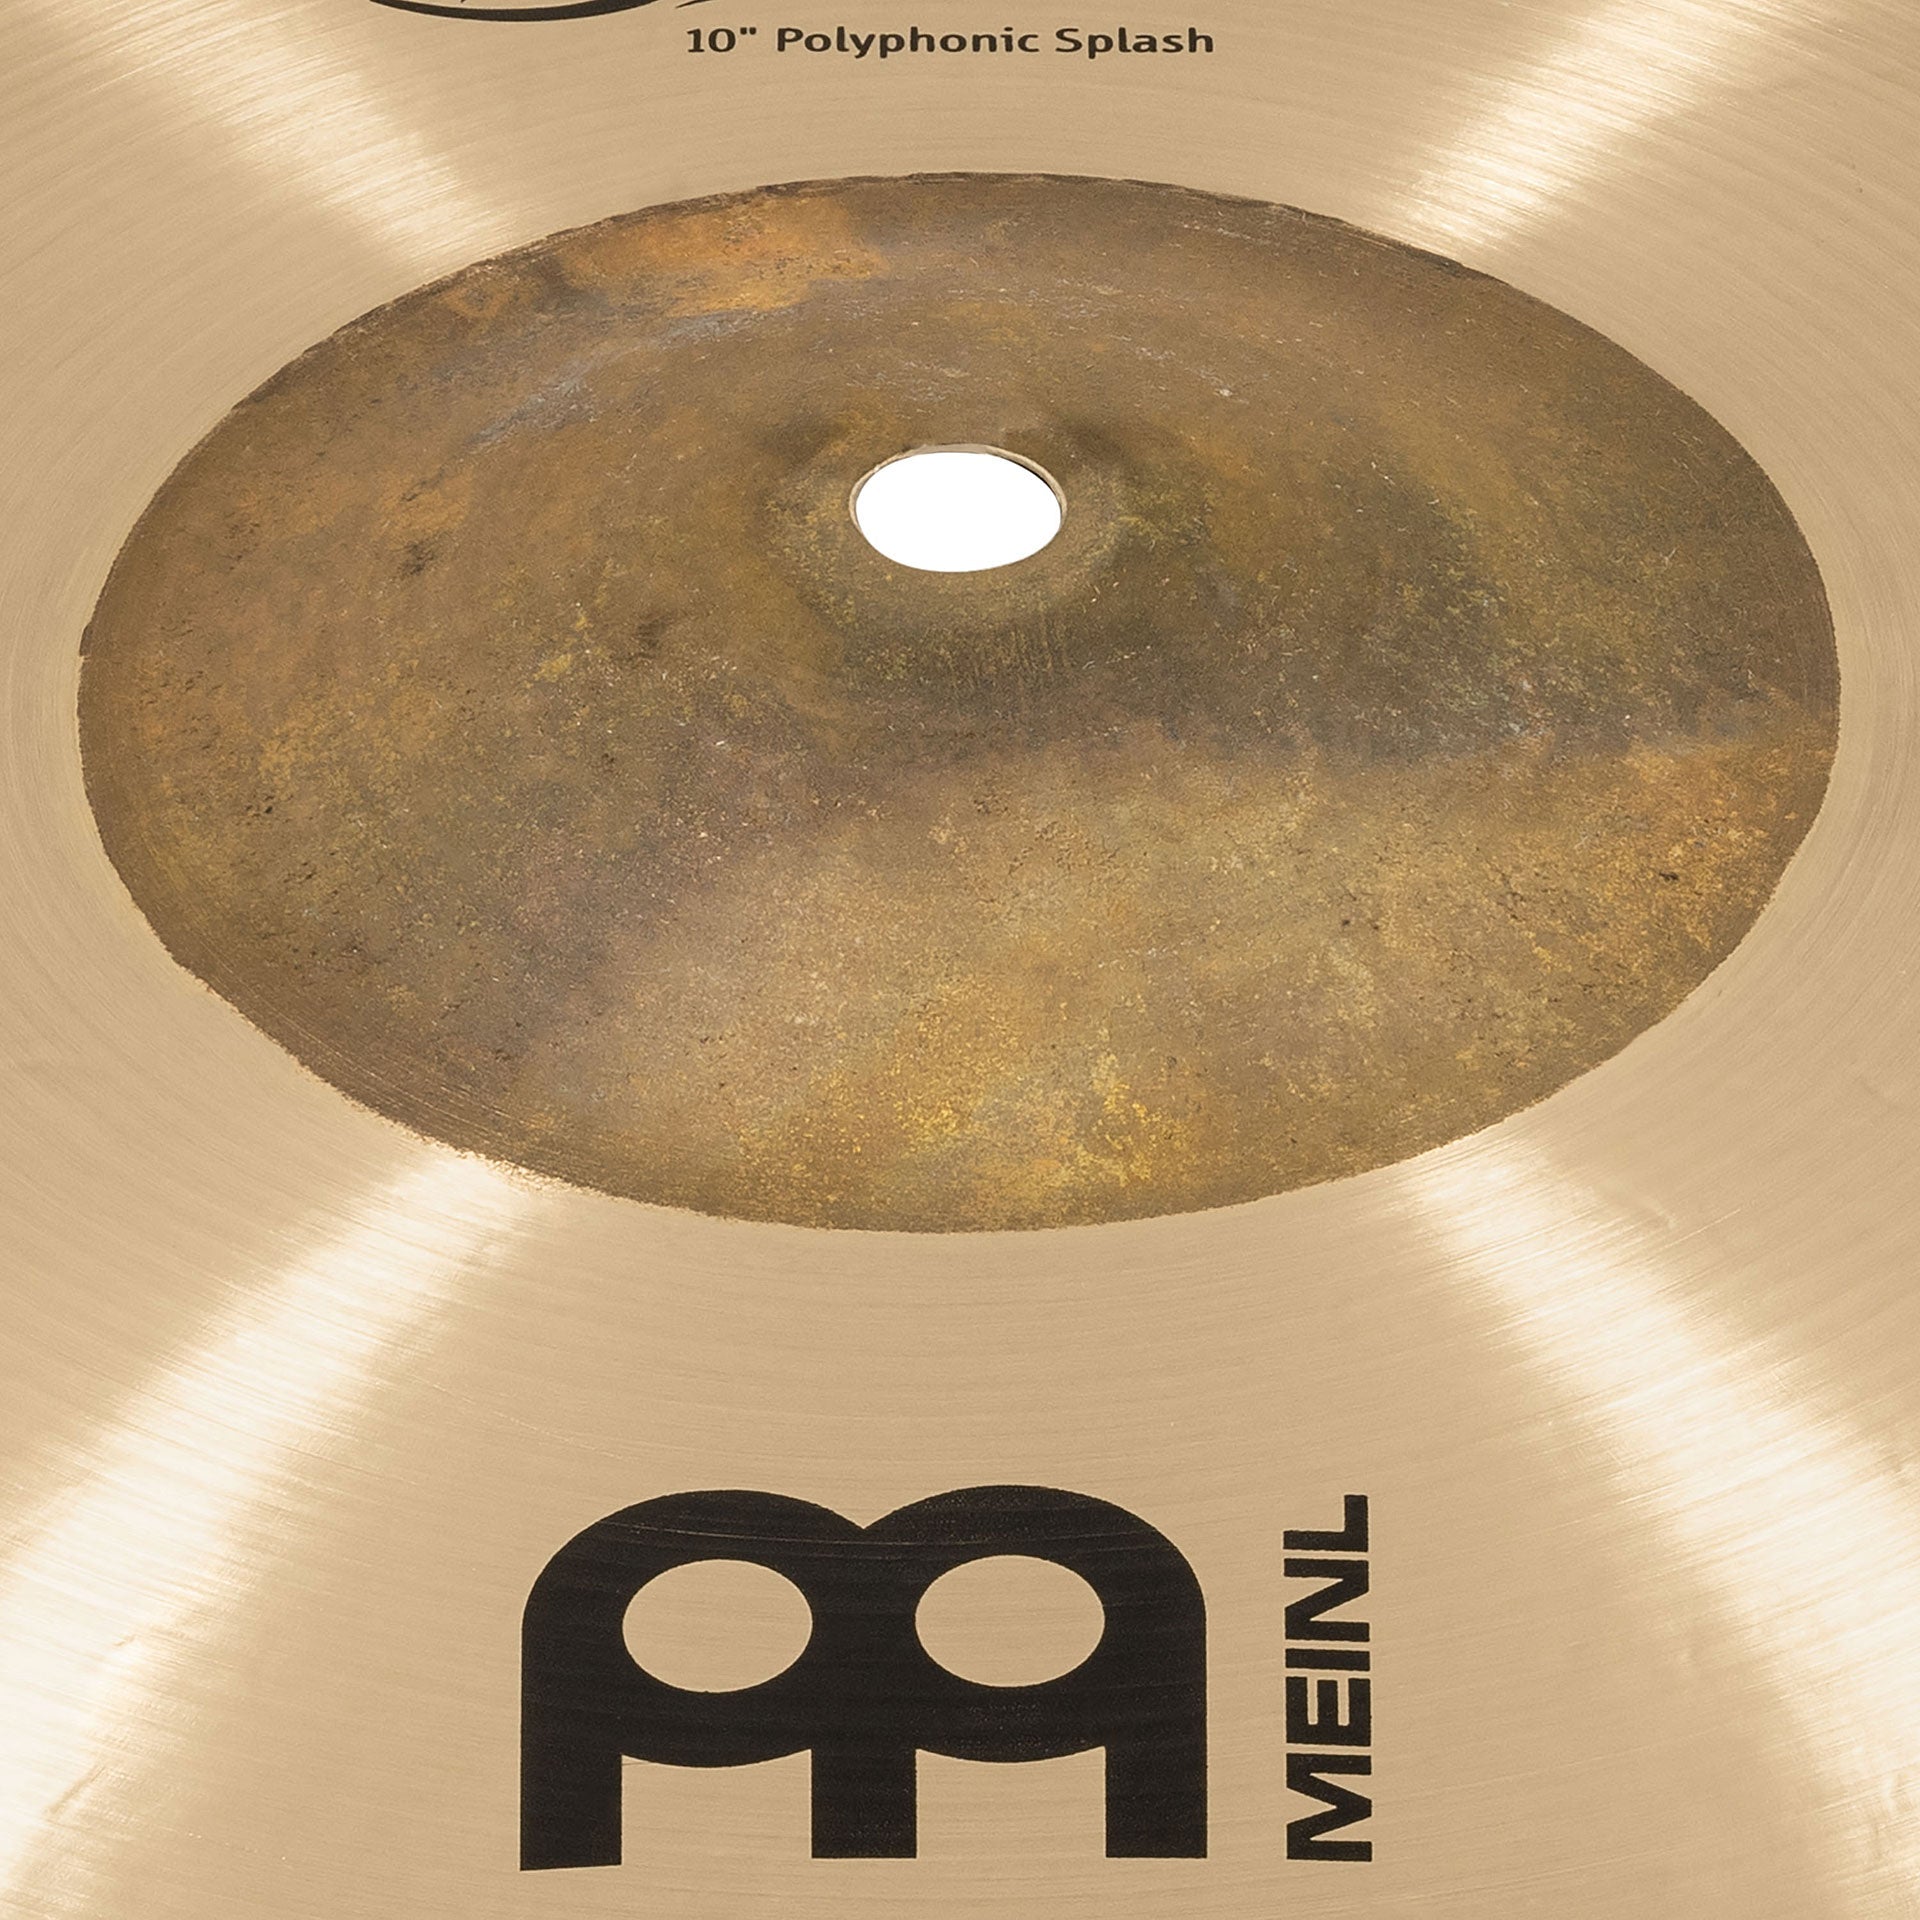 Cymbal Meinl Byzance Traditional 10" POLYPHONIC SPLASH - B10POS - Việt Music